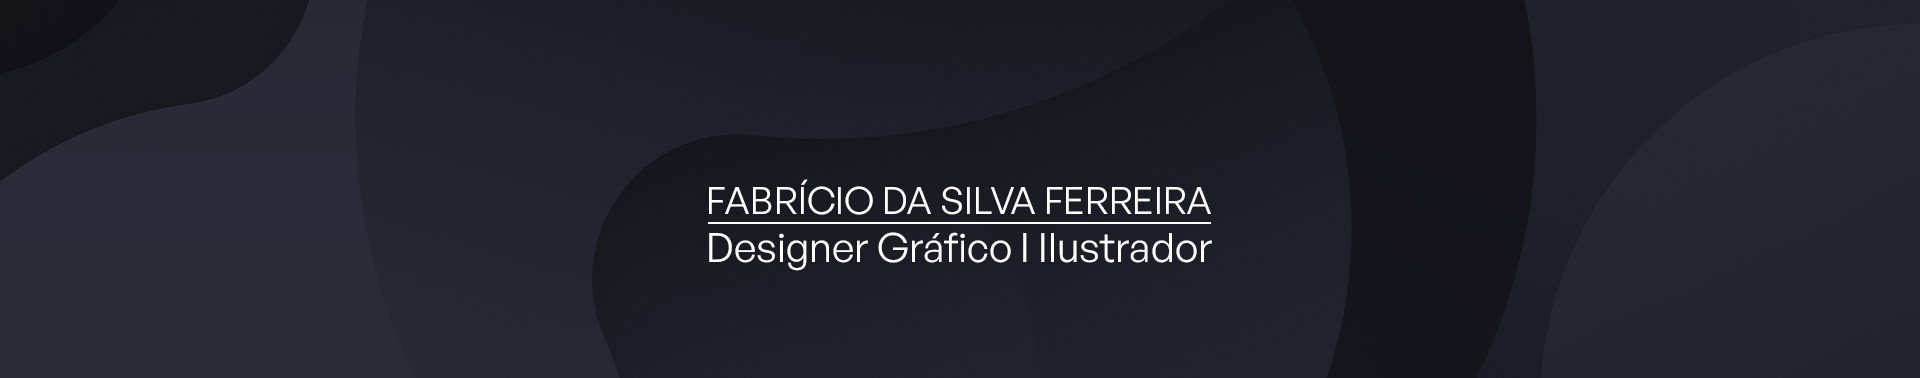 Banner de perfil de Fabrício da Silva Ferreira